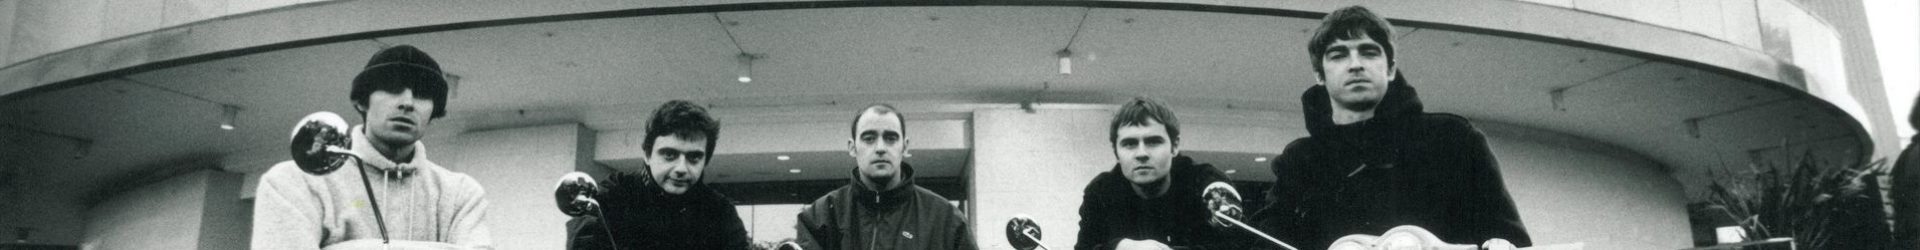 The Black Keys says Noel Gallagher called Kasabian “lad rock” at Glastonbury